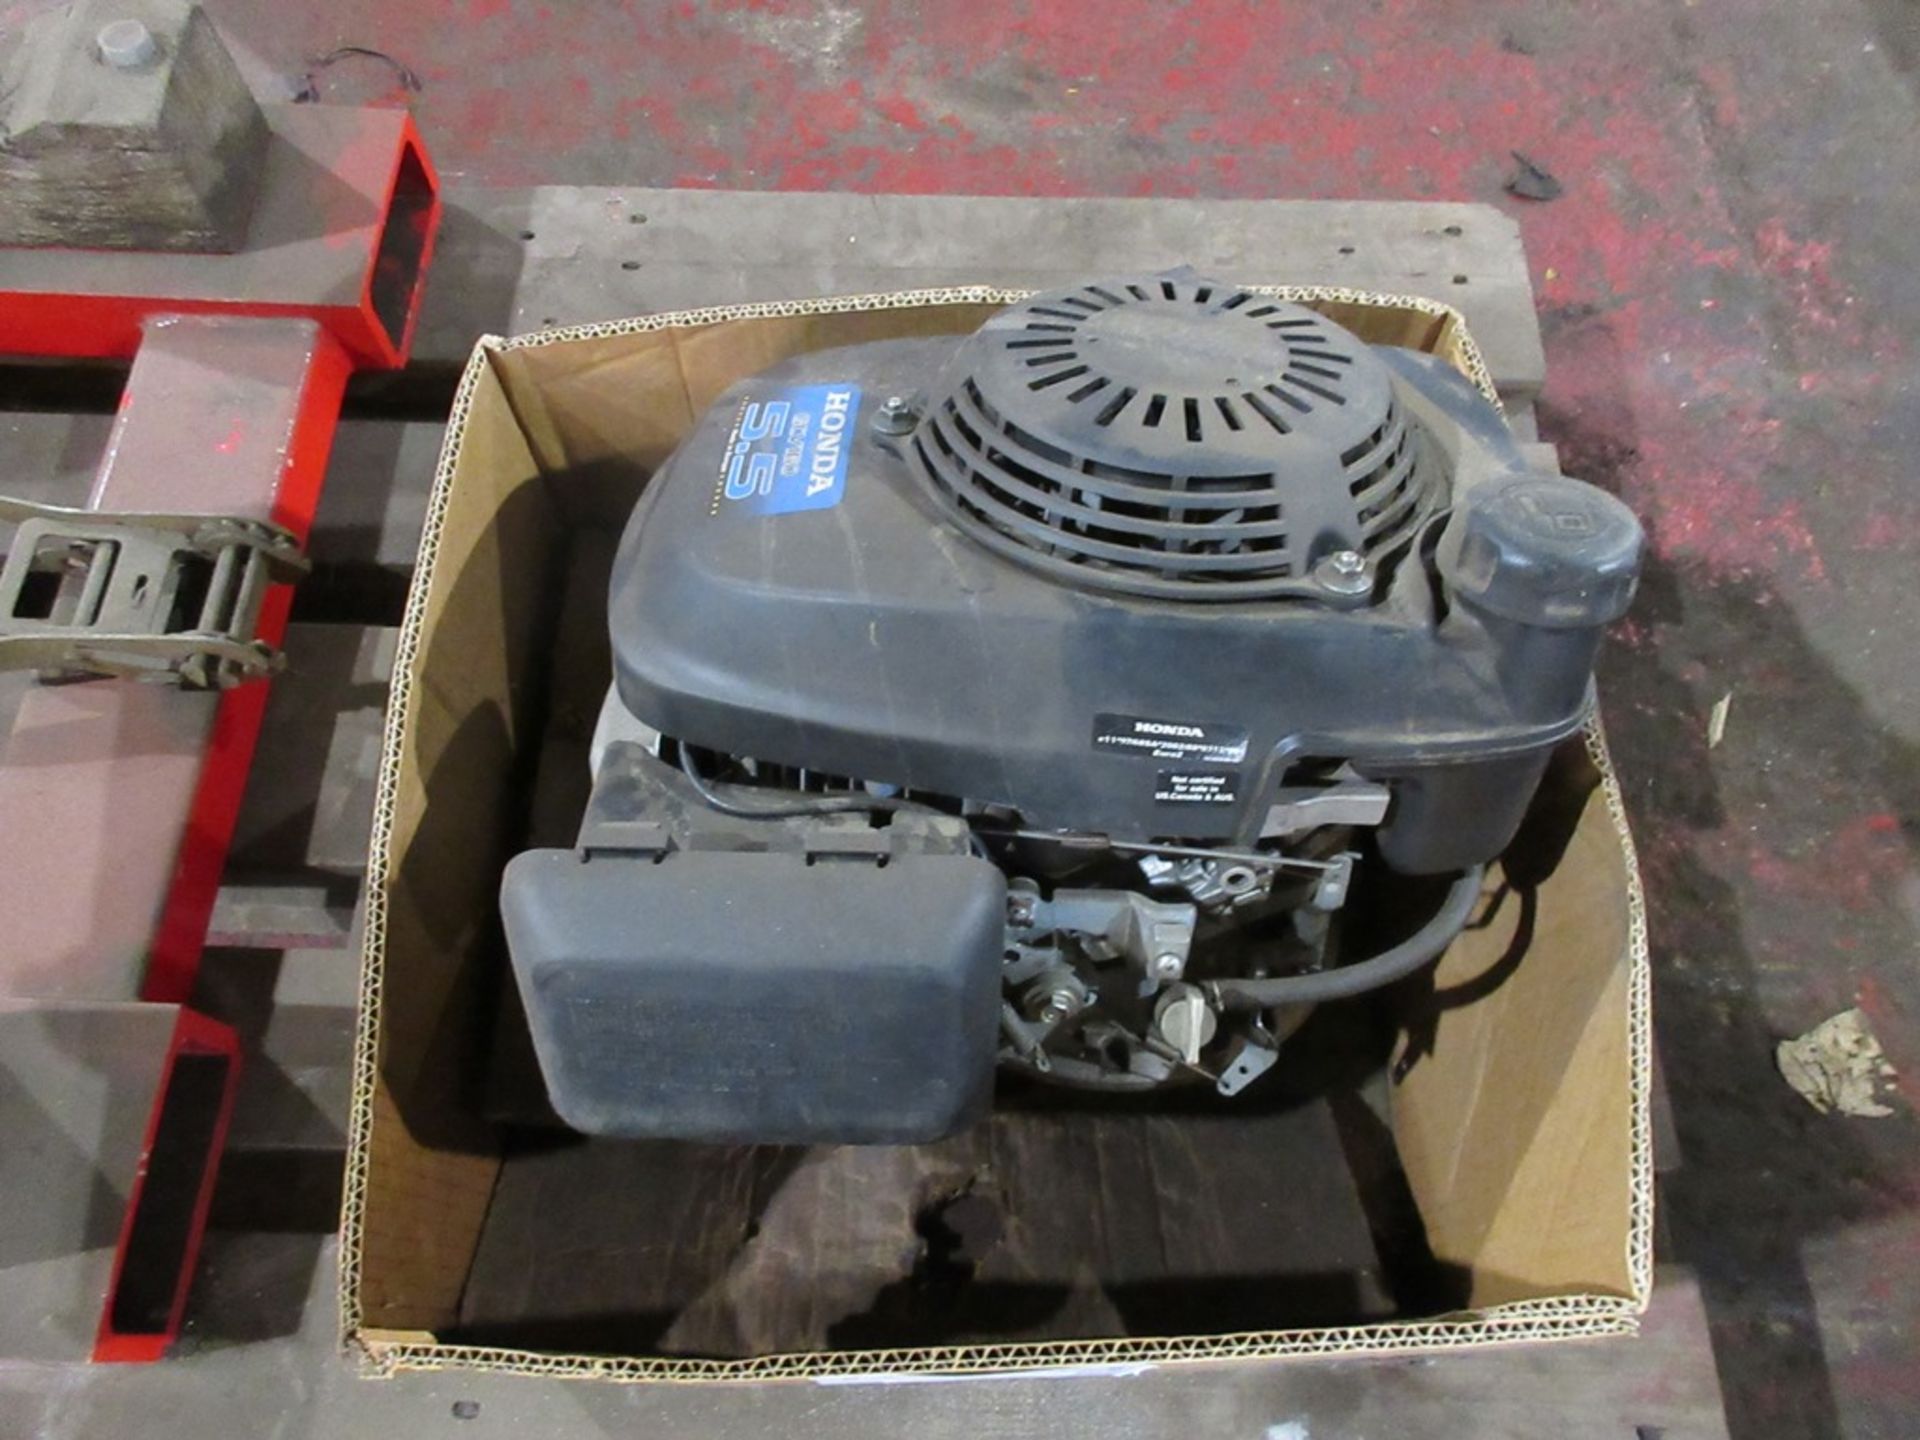 Honda petrol engine - type GCV160 5.5